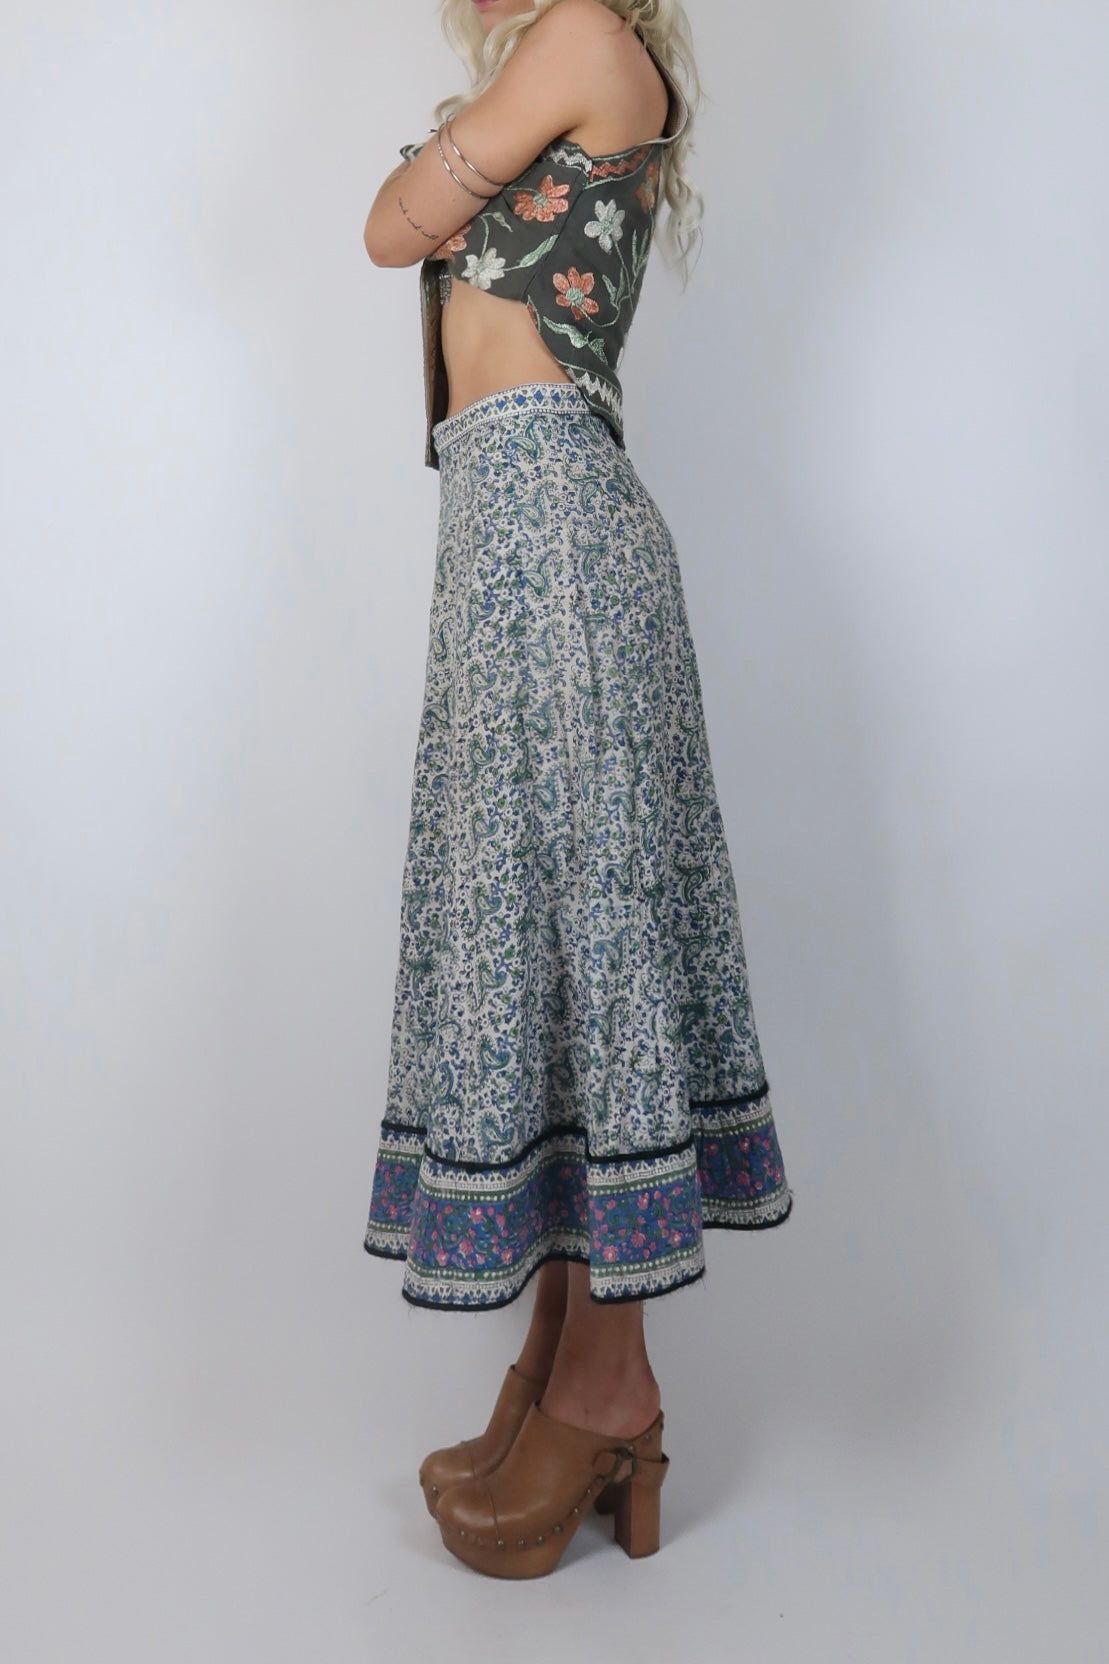 1970s Phool cotton midi skirt